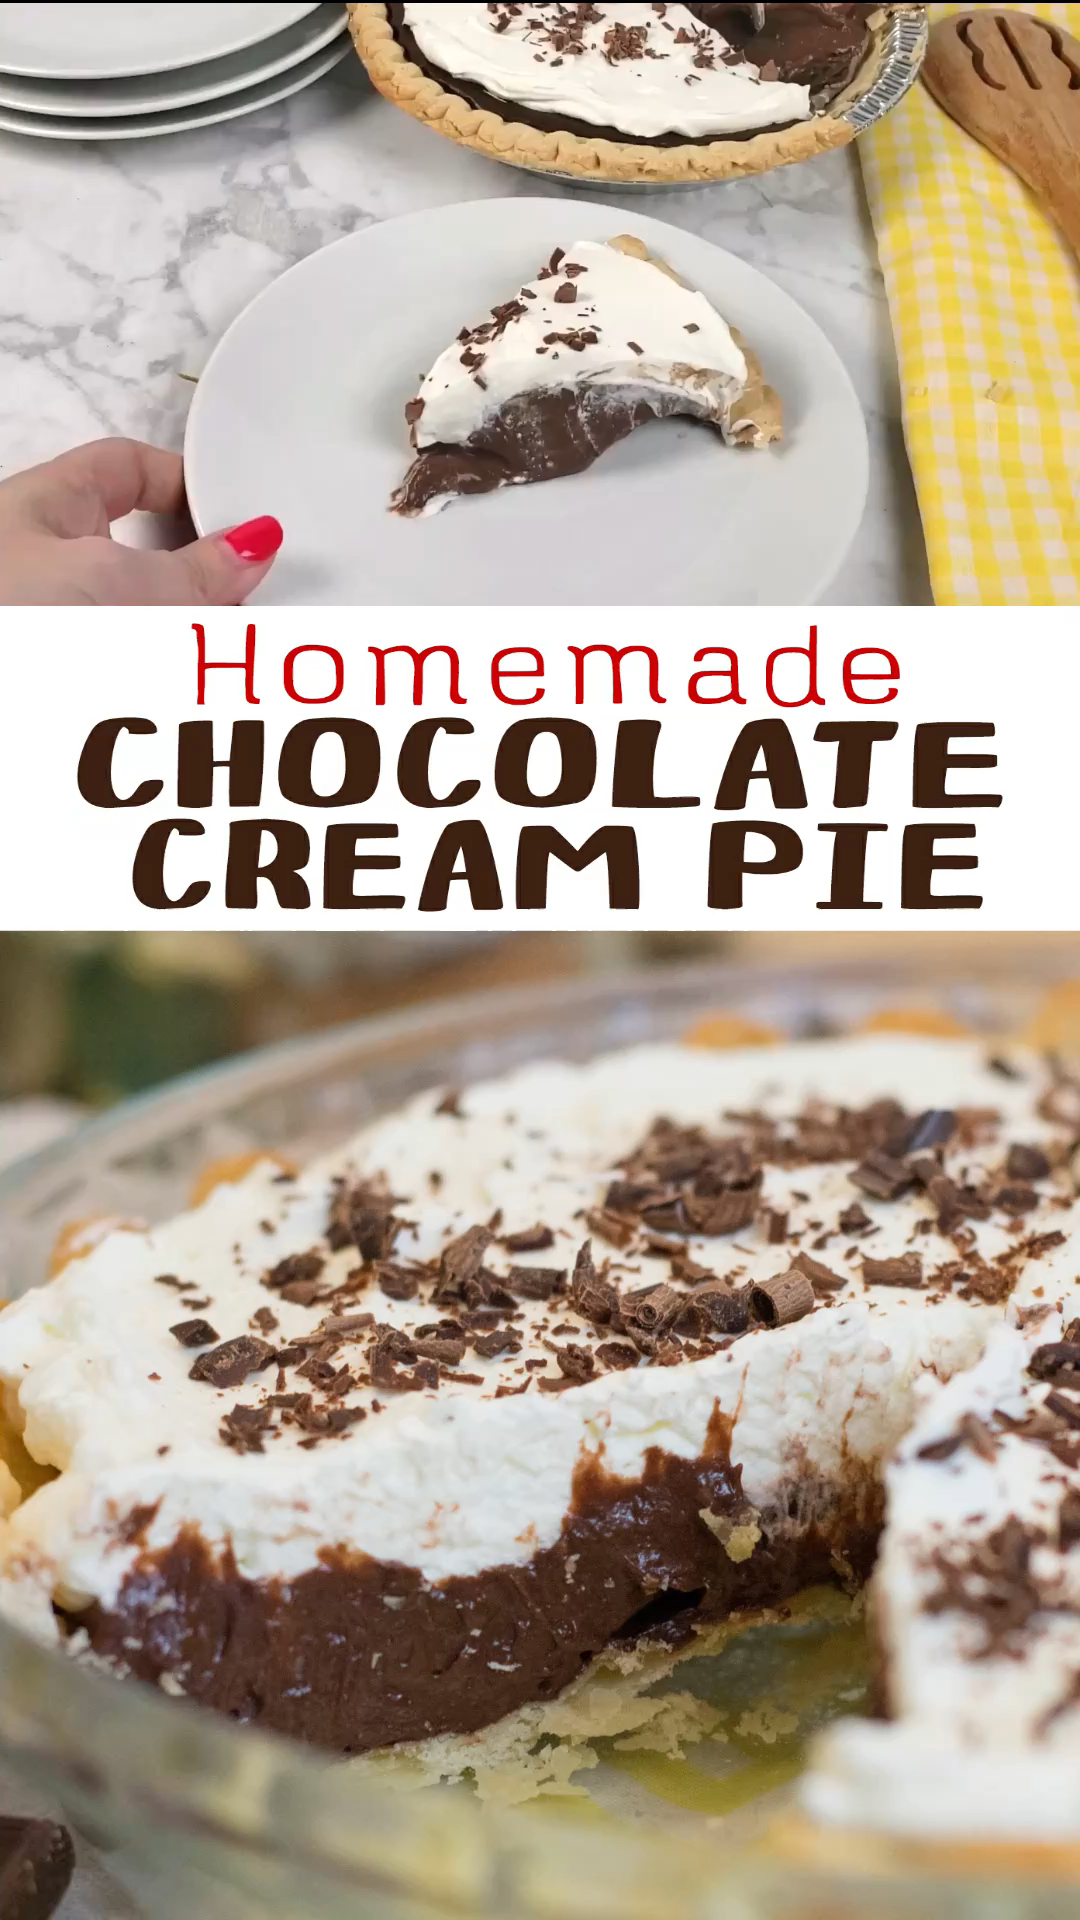 Chocolate Cream Pie (from scratch) -   19 thanksgiving desserts easy chocolate ideas